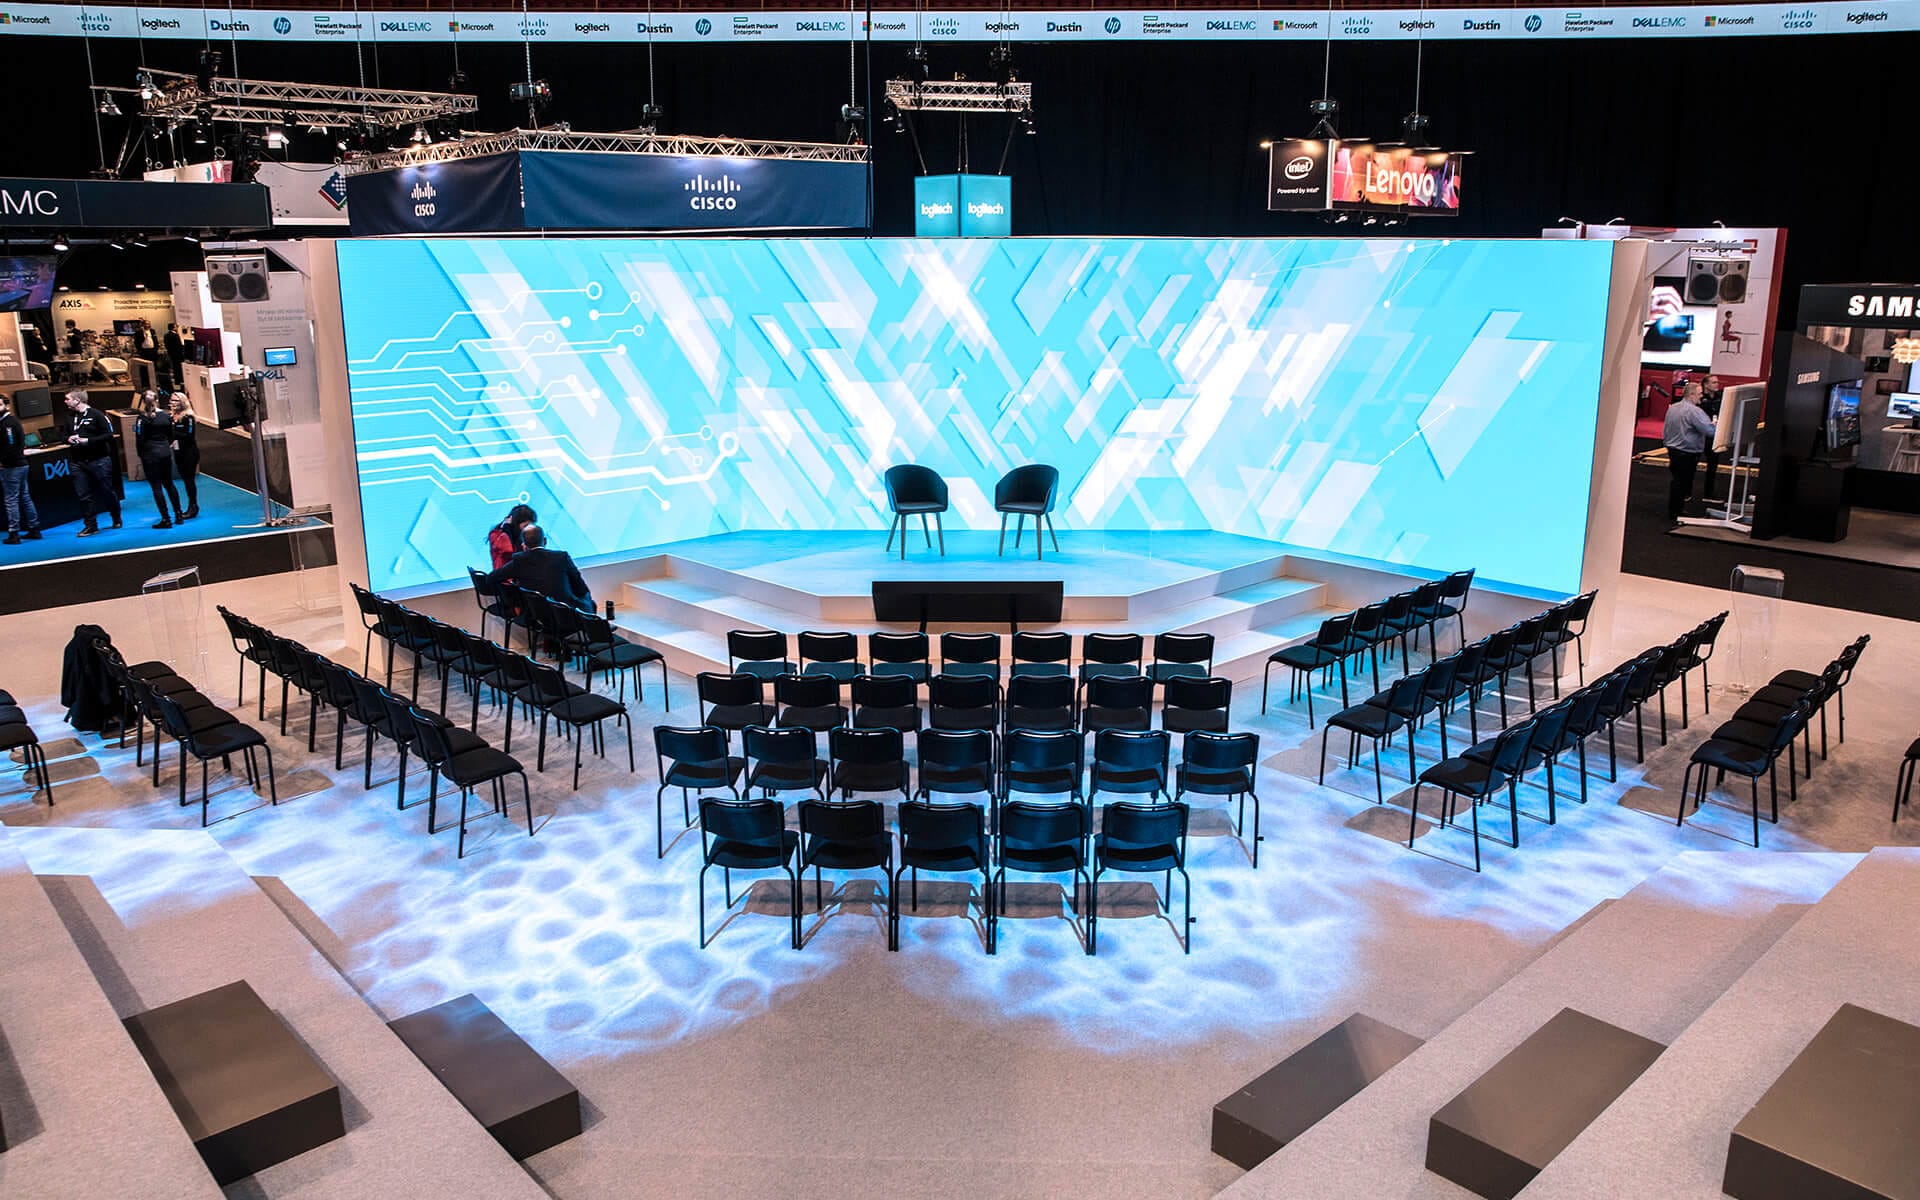 LED-skärm i mässmonter på Dustin Expo 2018 mässan i Globen